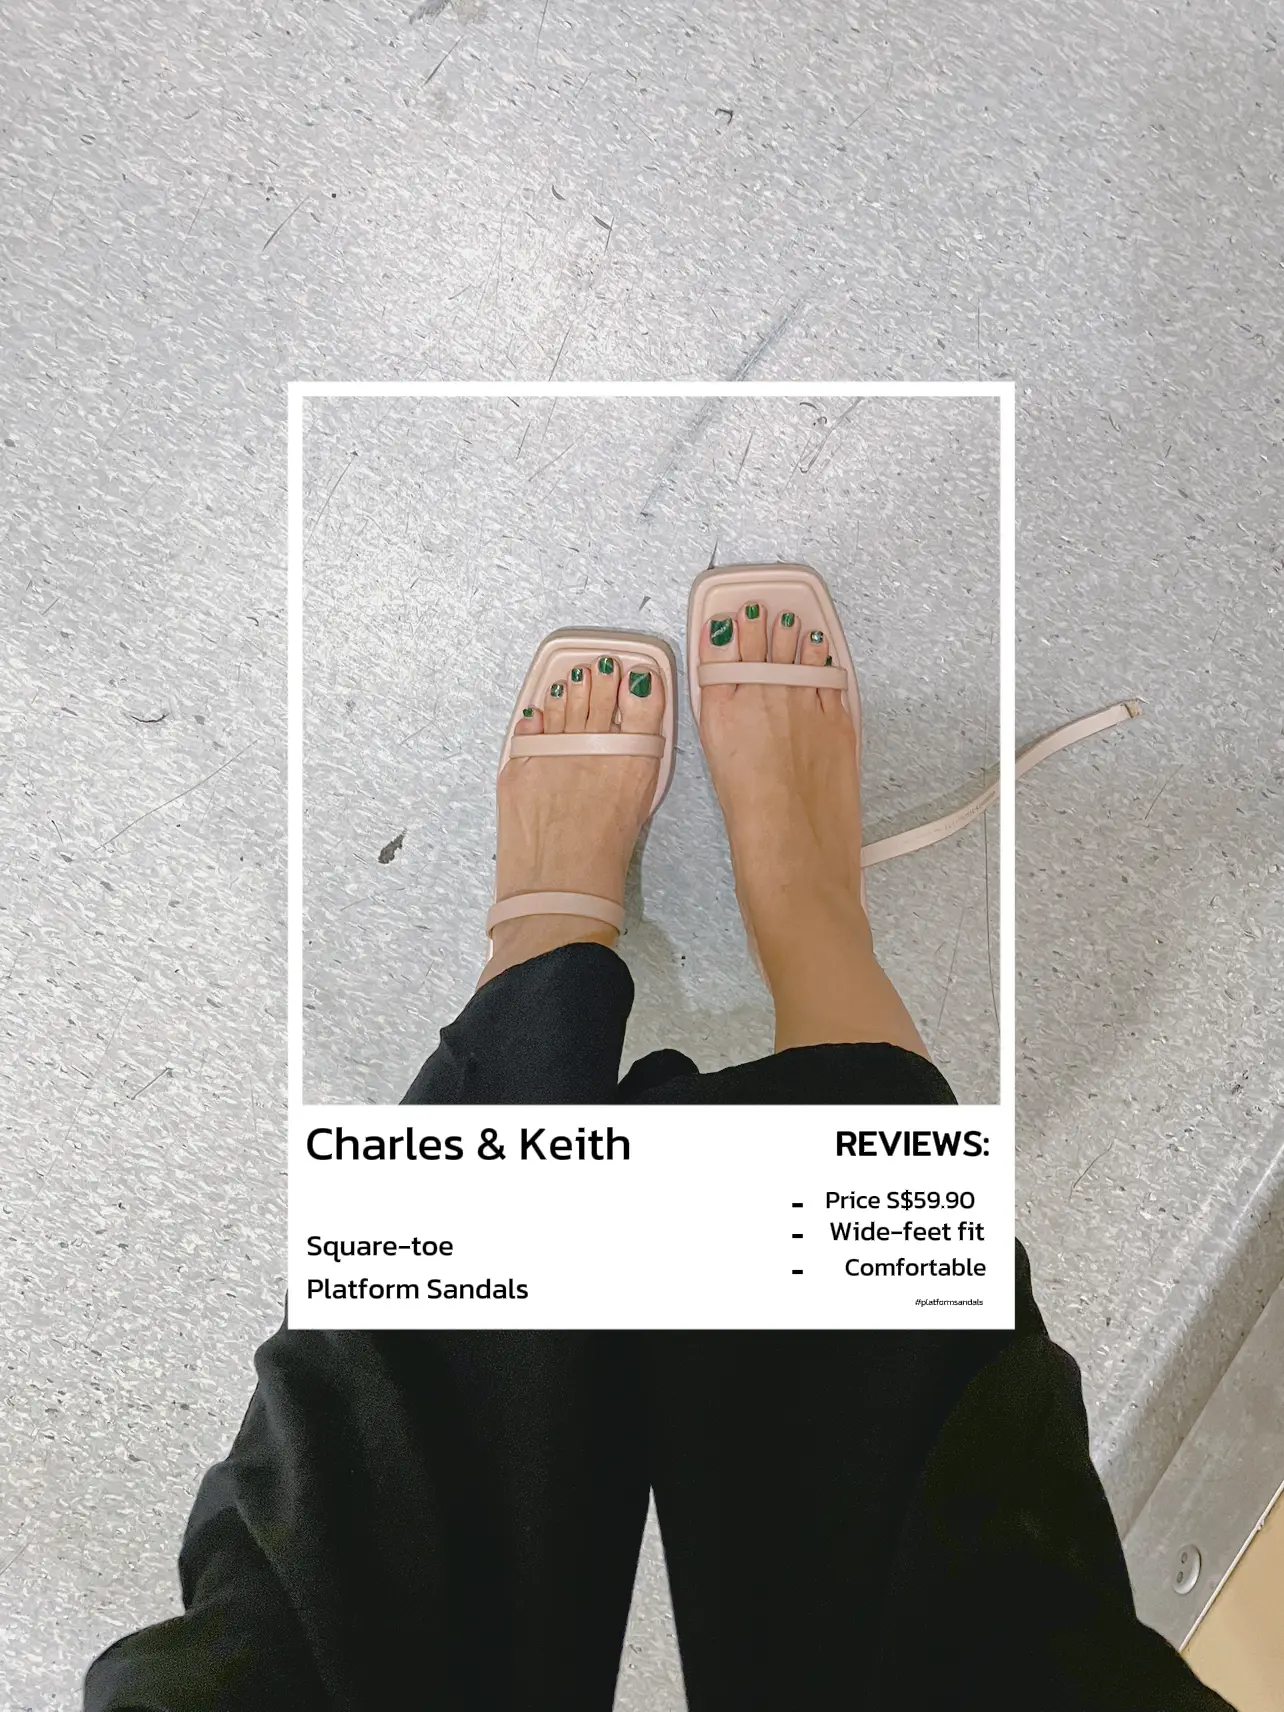 CHARLES & KEITH - 23 Serangoon Central, Singapore, Singapore - Shoe Stores  - Phone Number - Yelp